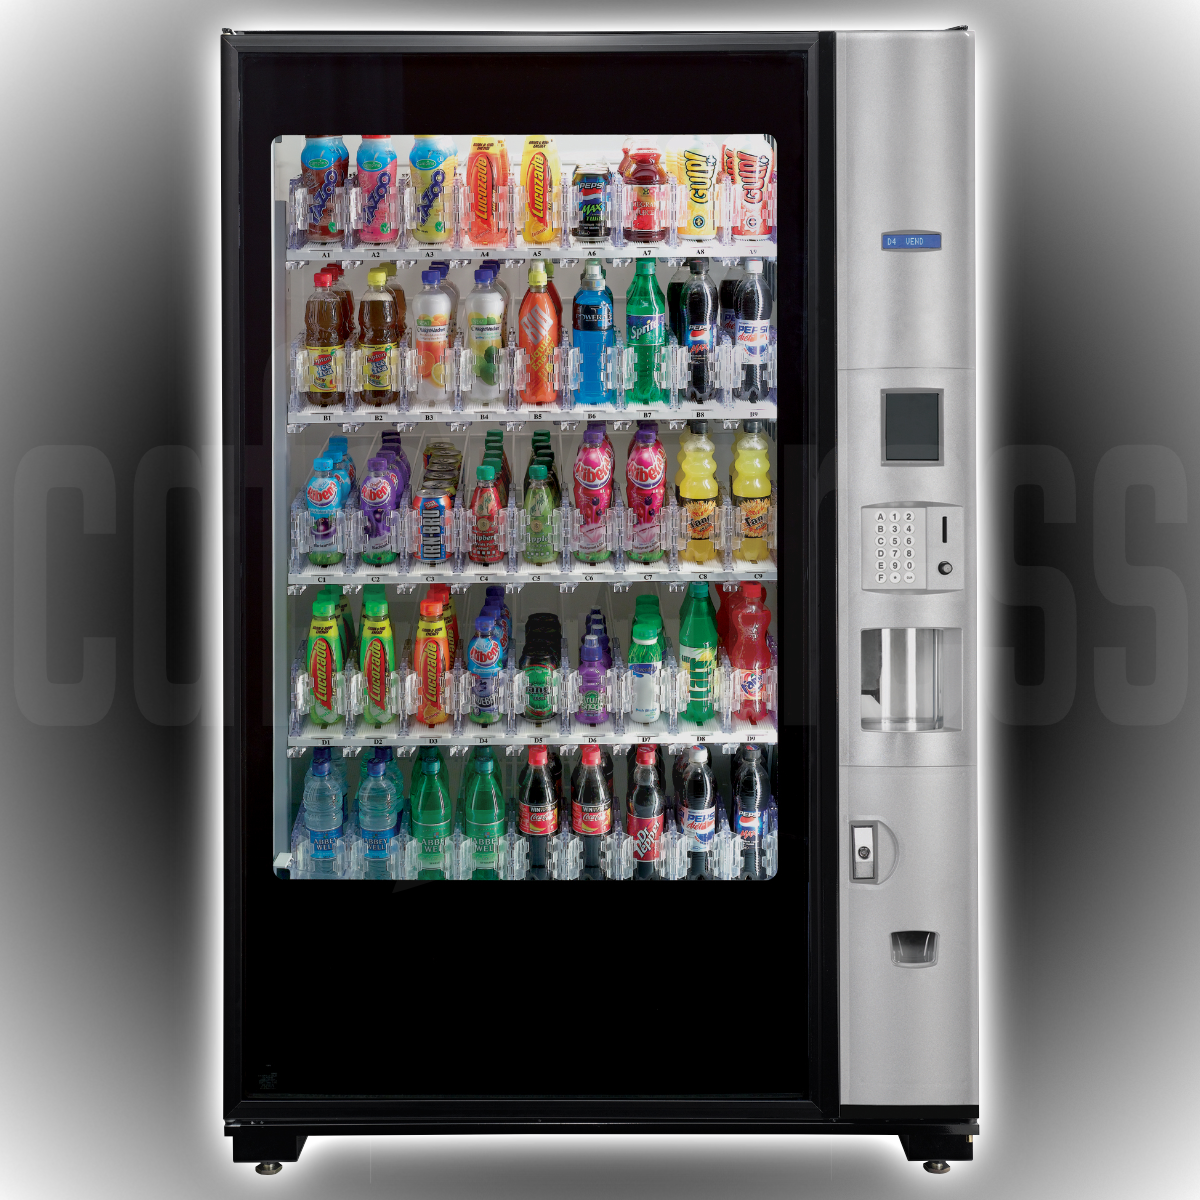 Bevmax 45 Classic R290 Cold Drink Vending Machine